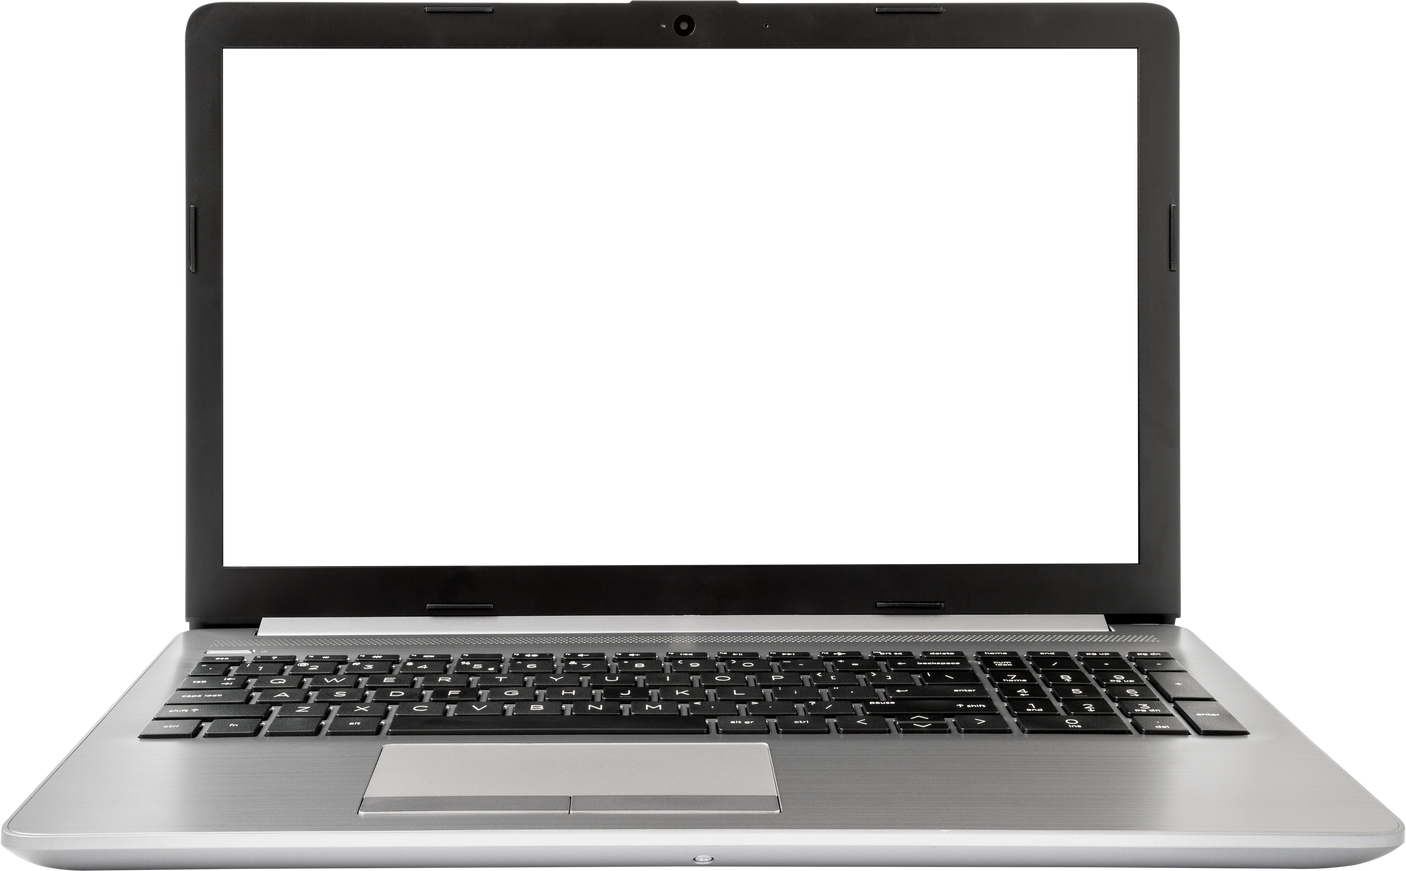 Laptop on transparent background